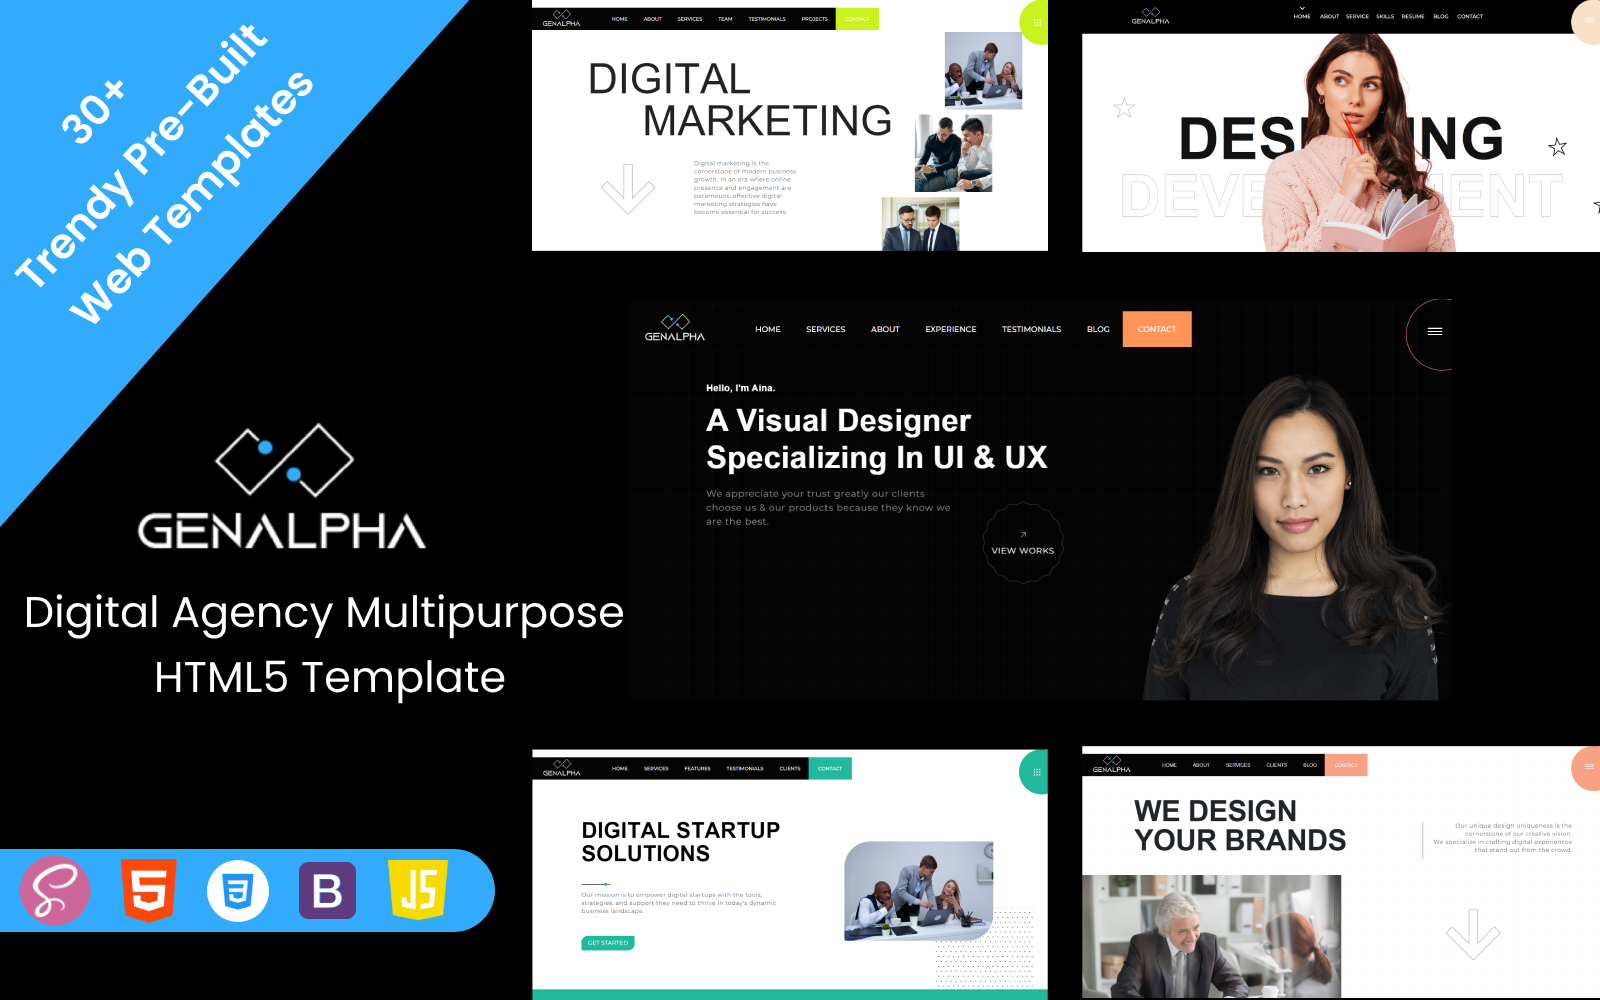 GenAlpha - Digital Agency MultiPurpose HTML Templates